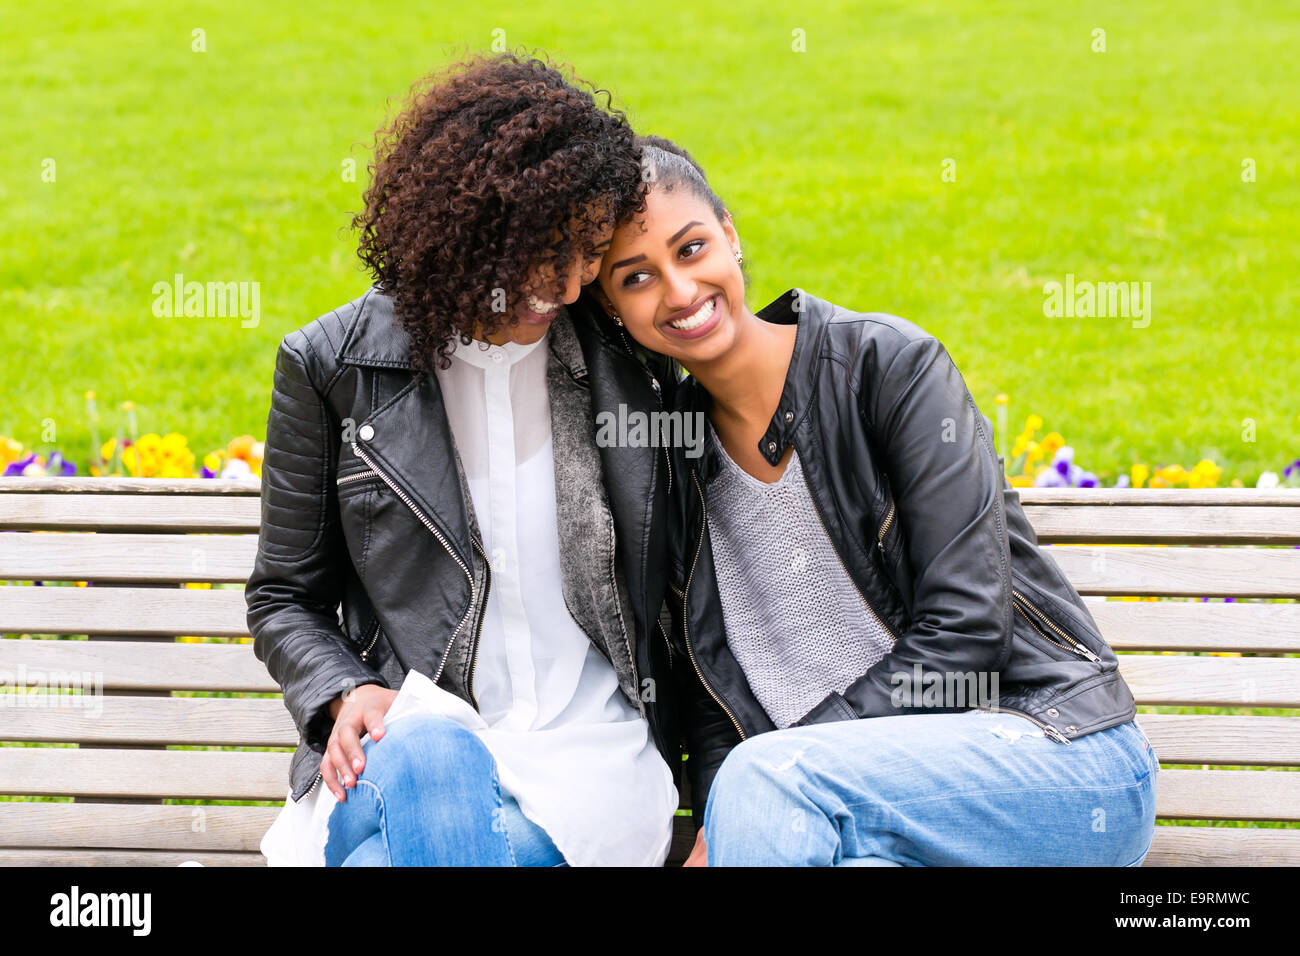 Deux adolescents d'Afrique du Nord friends sitting together on park bench talking Banque D'Images